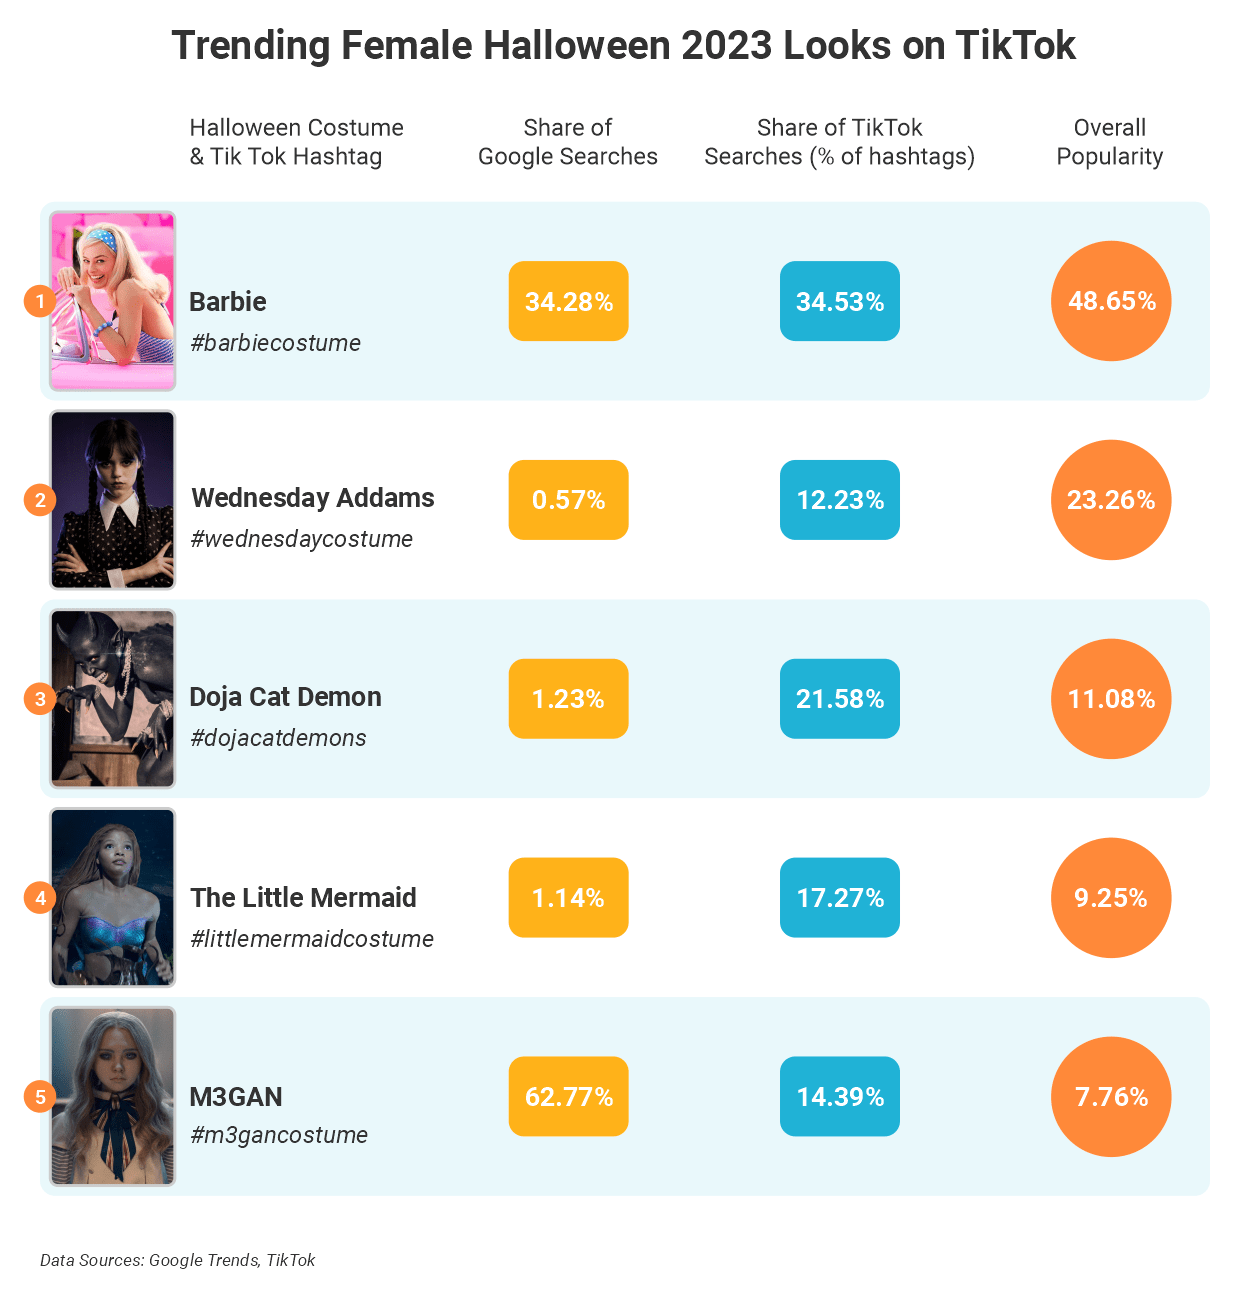 Wednesday Addams costumes will dominate Halloween 2023